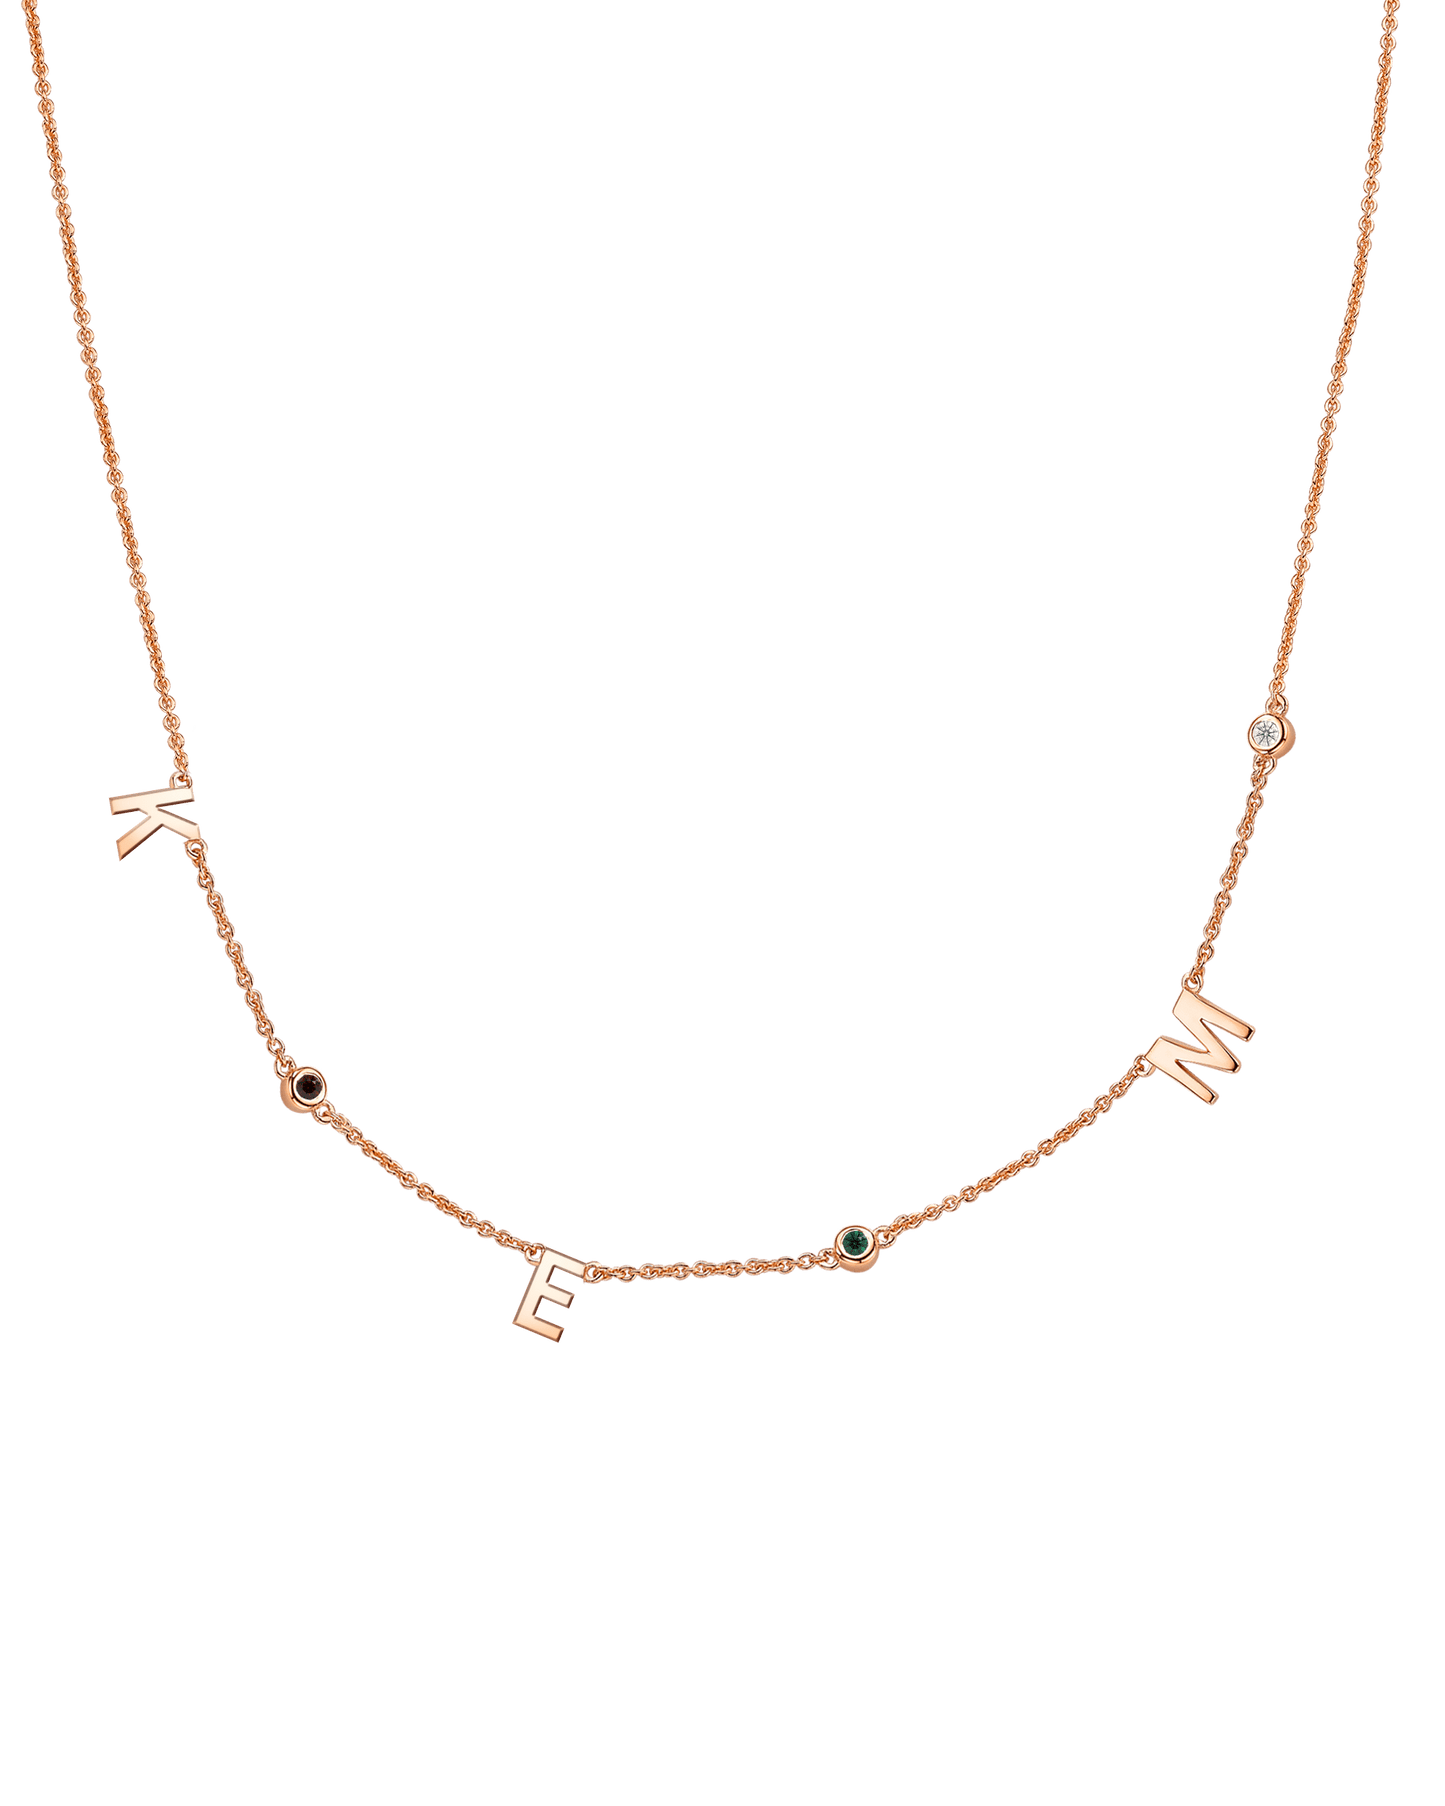 Initial Birthstone Necklace - 18K Rose Vermeil Necklaces magal-dev 3 Initials + 3 Birthstones Adjustable 16-17" (40cm-43cm) 